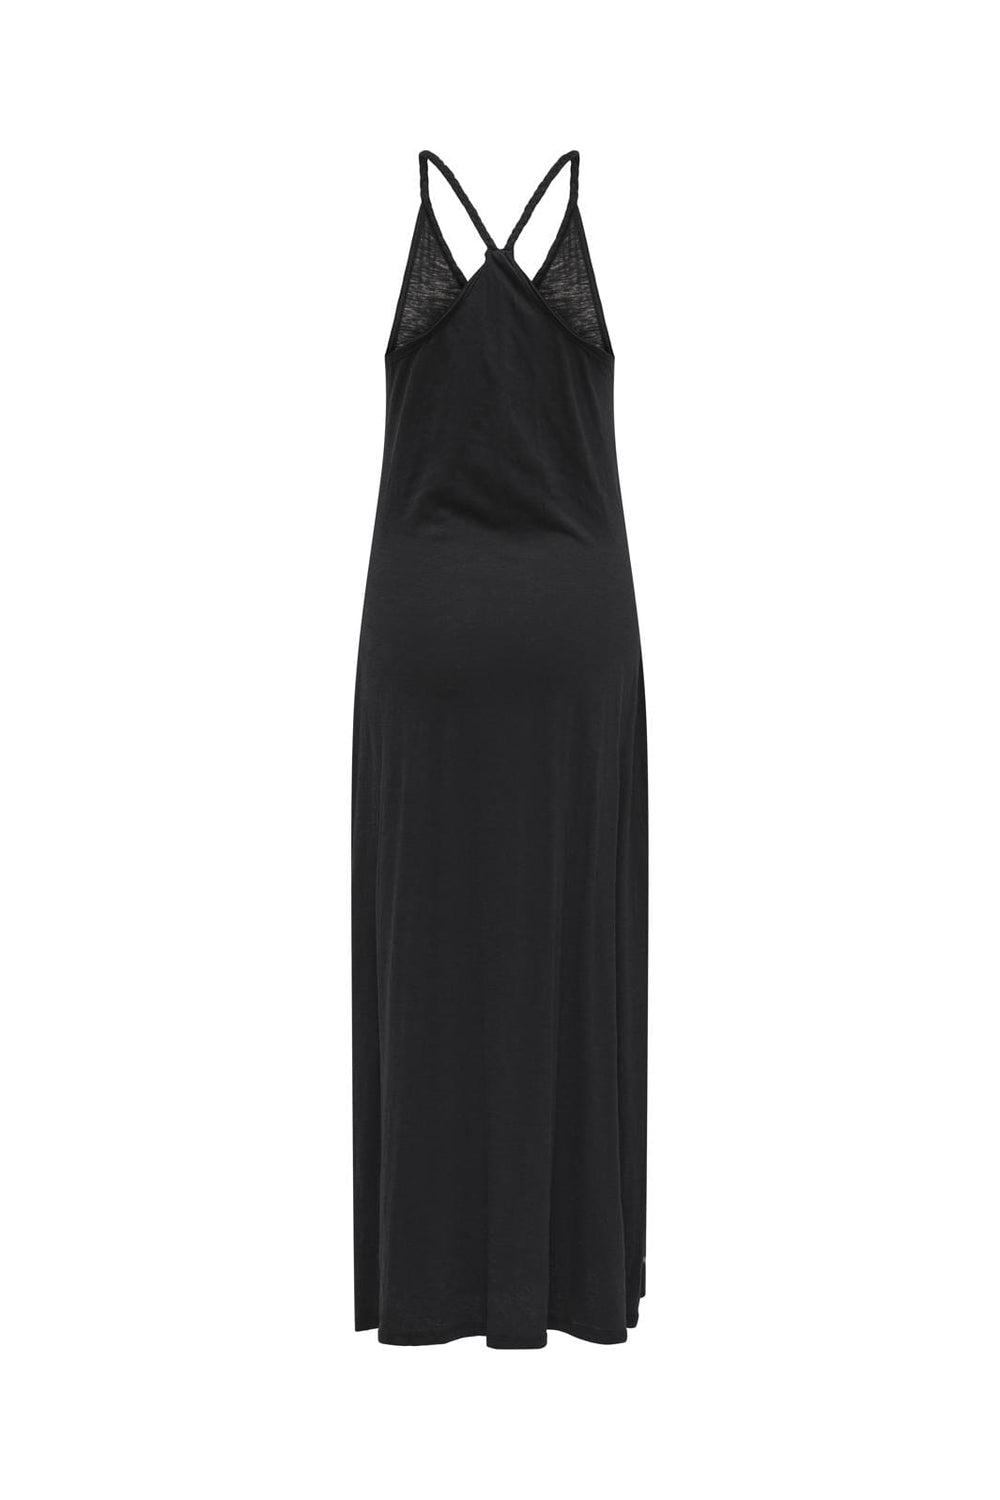 Only - Onlrica S/L Maxi Dress - 4511116 Black